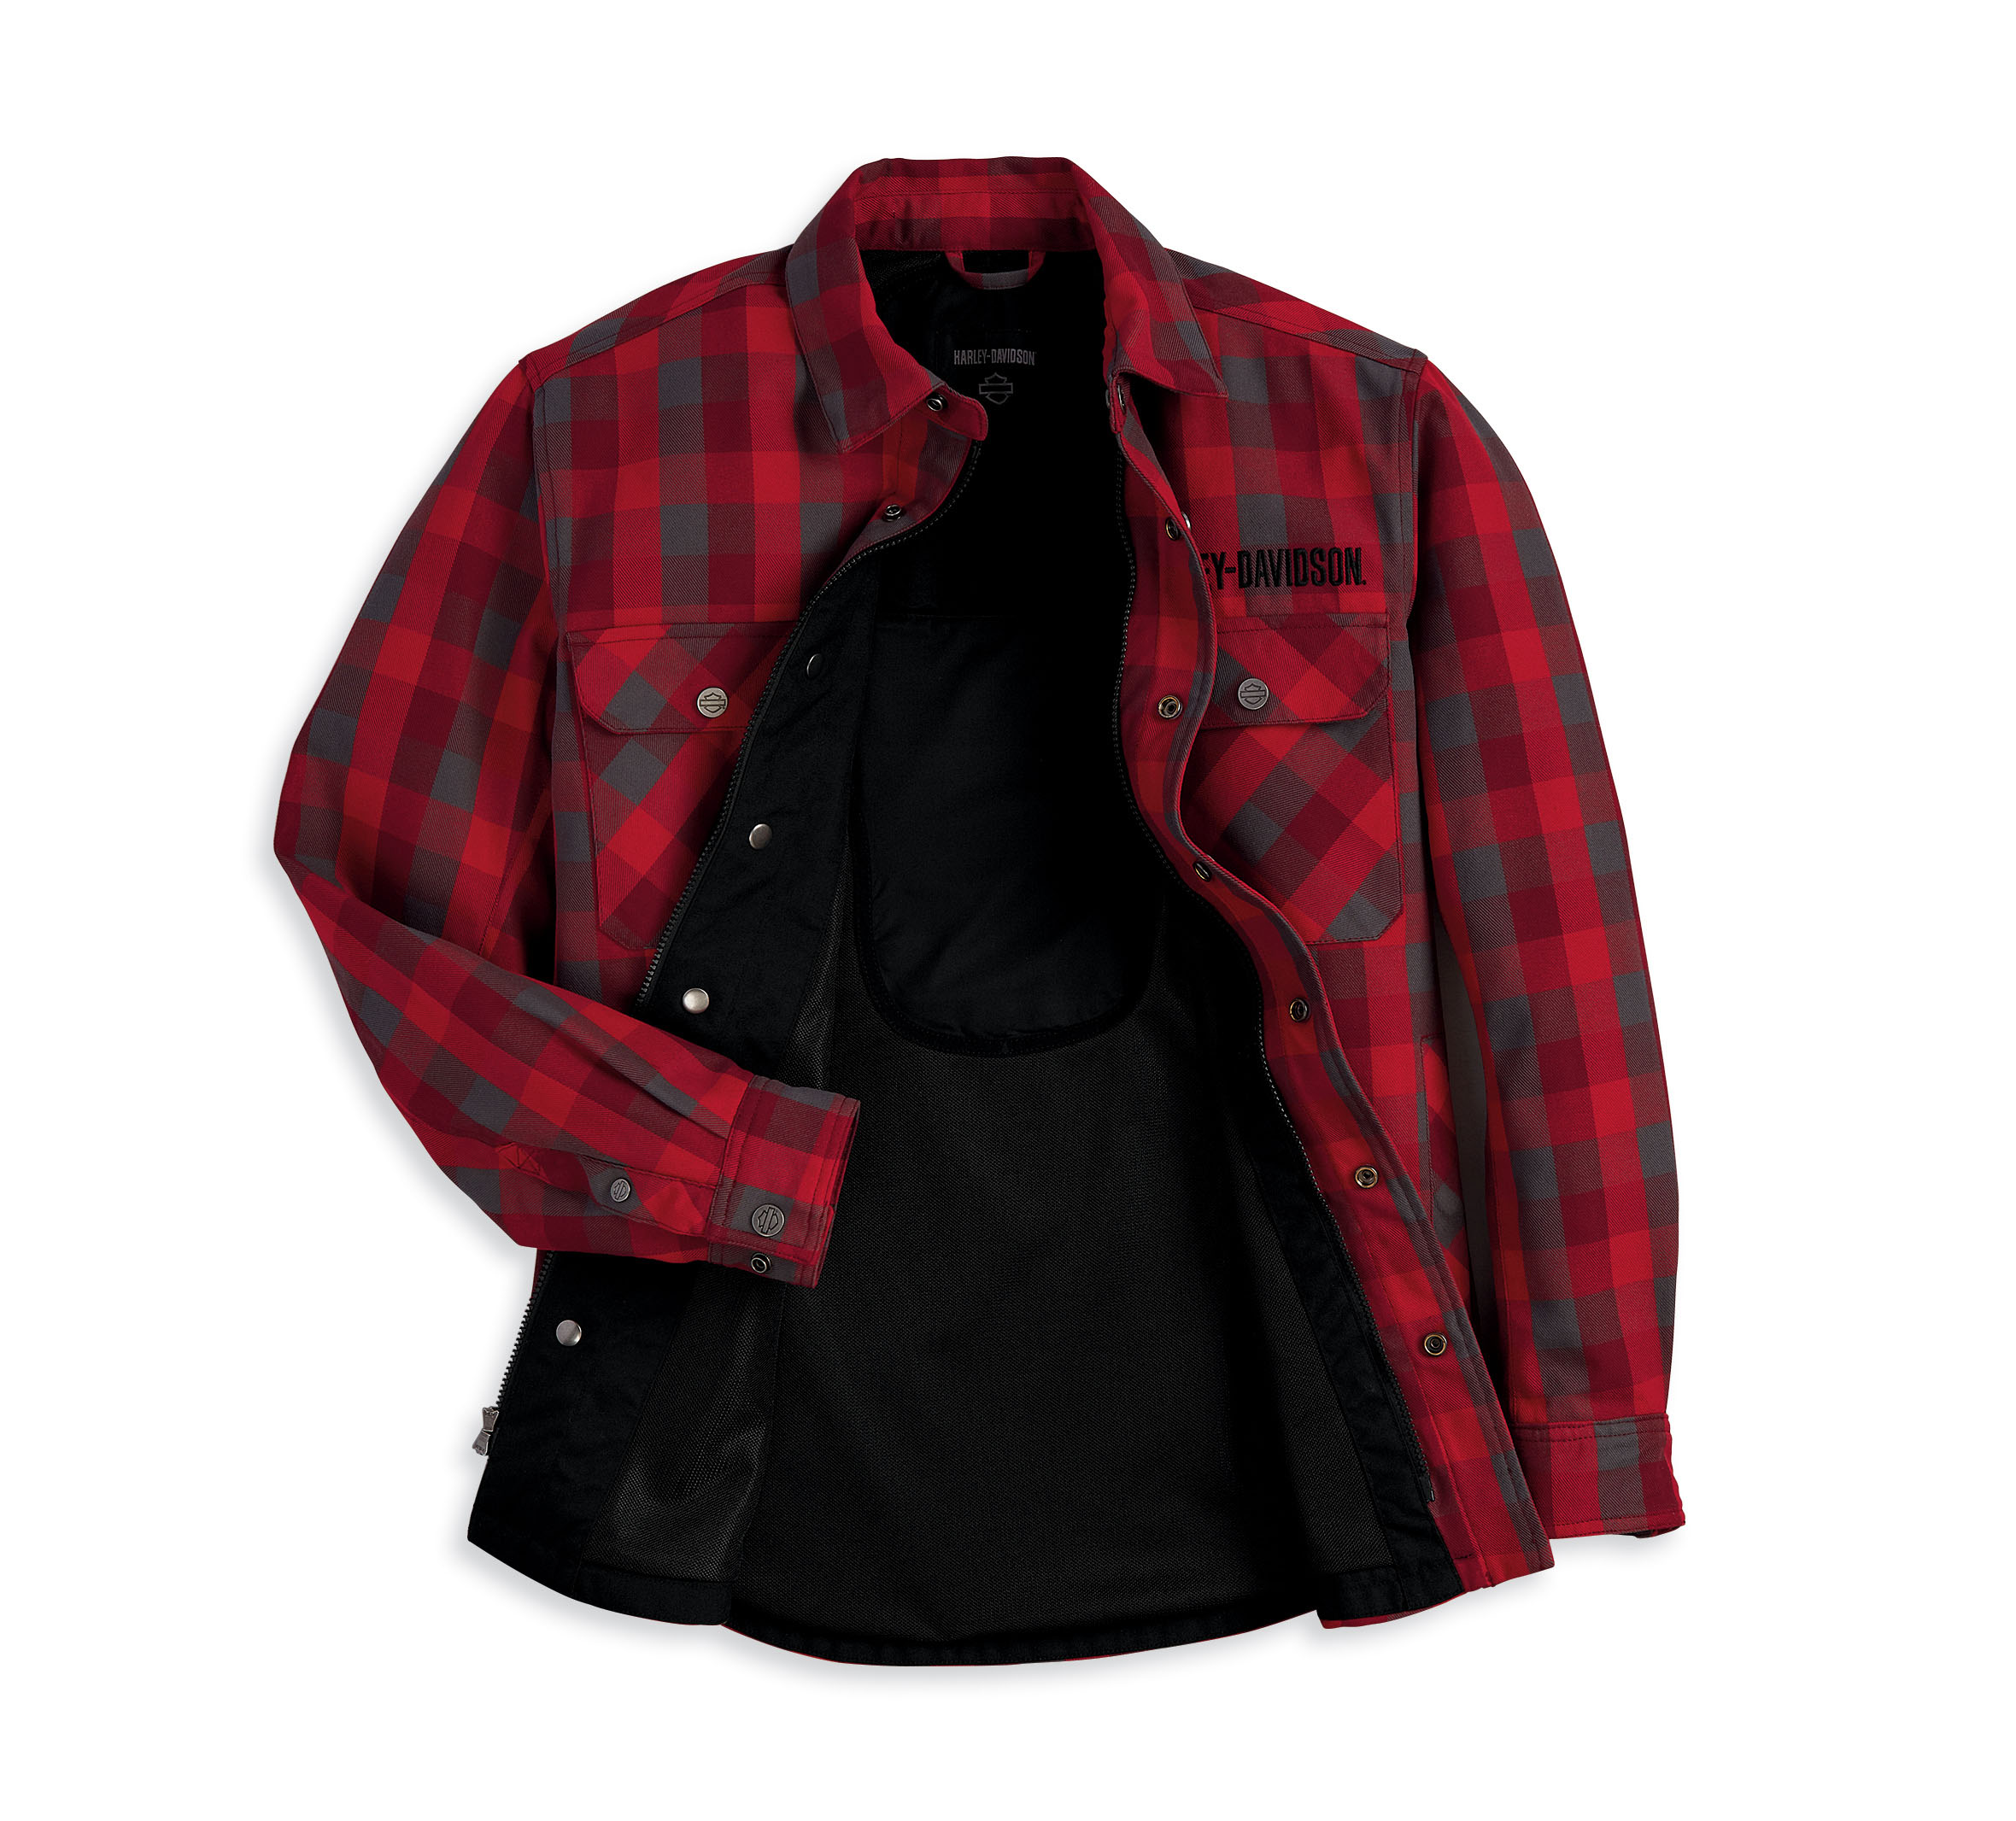 Men's Operative Riding Shirt Jacket - Red Plaid | Harley-Davidson USA